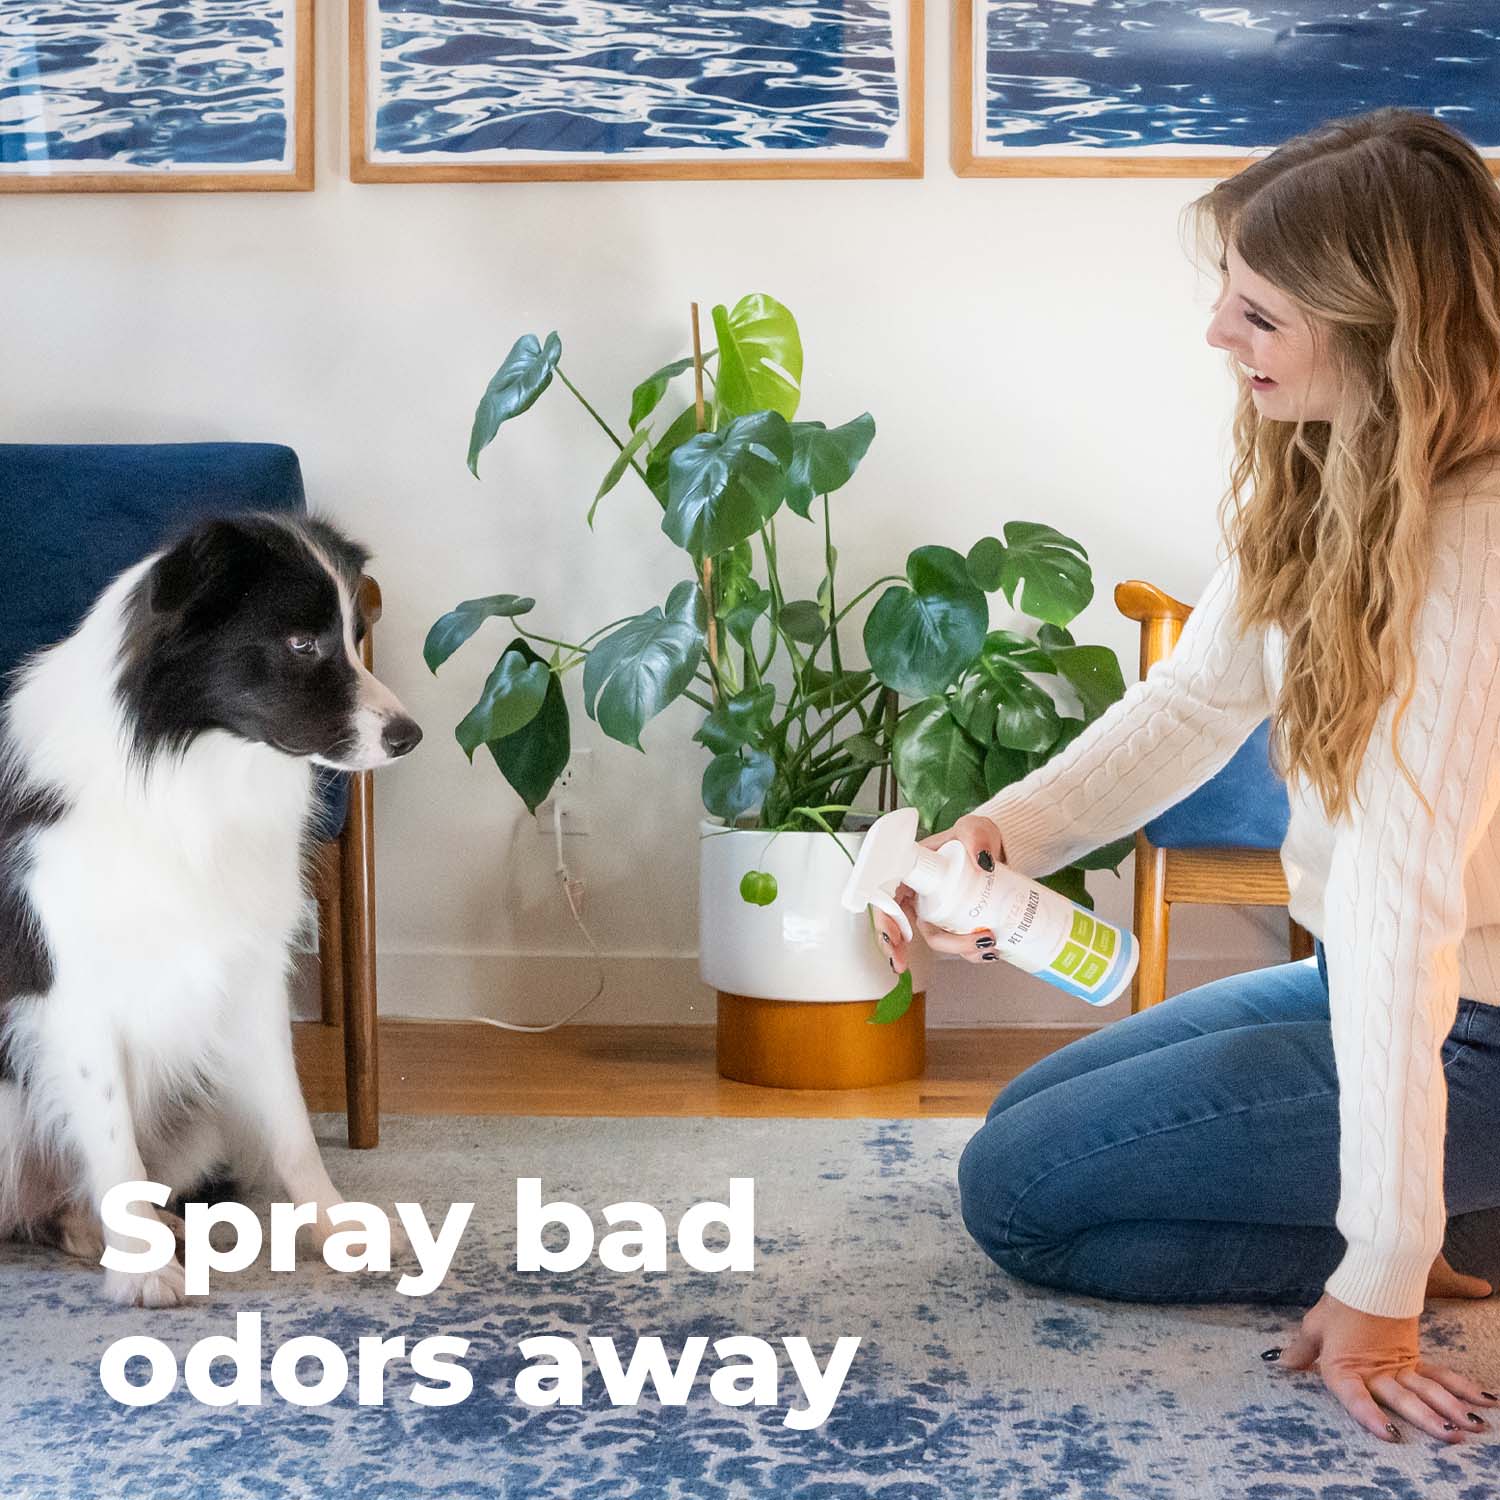 oxyfresh-advanced-pet-deodorizer-spray-allows-you-to-spray-bad-odors-away